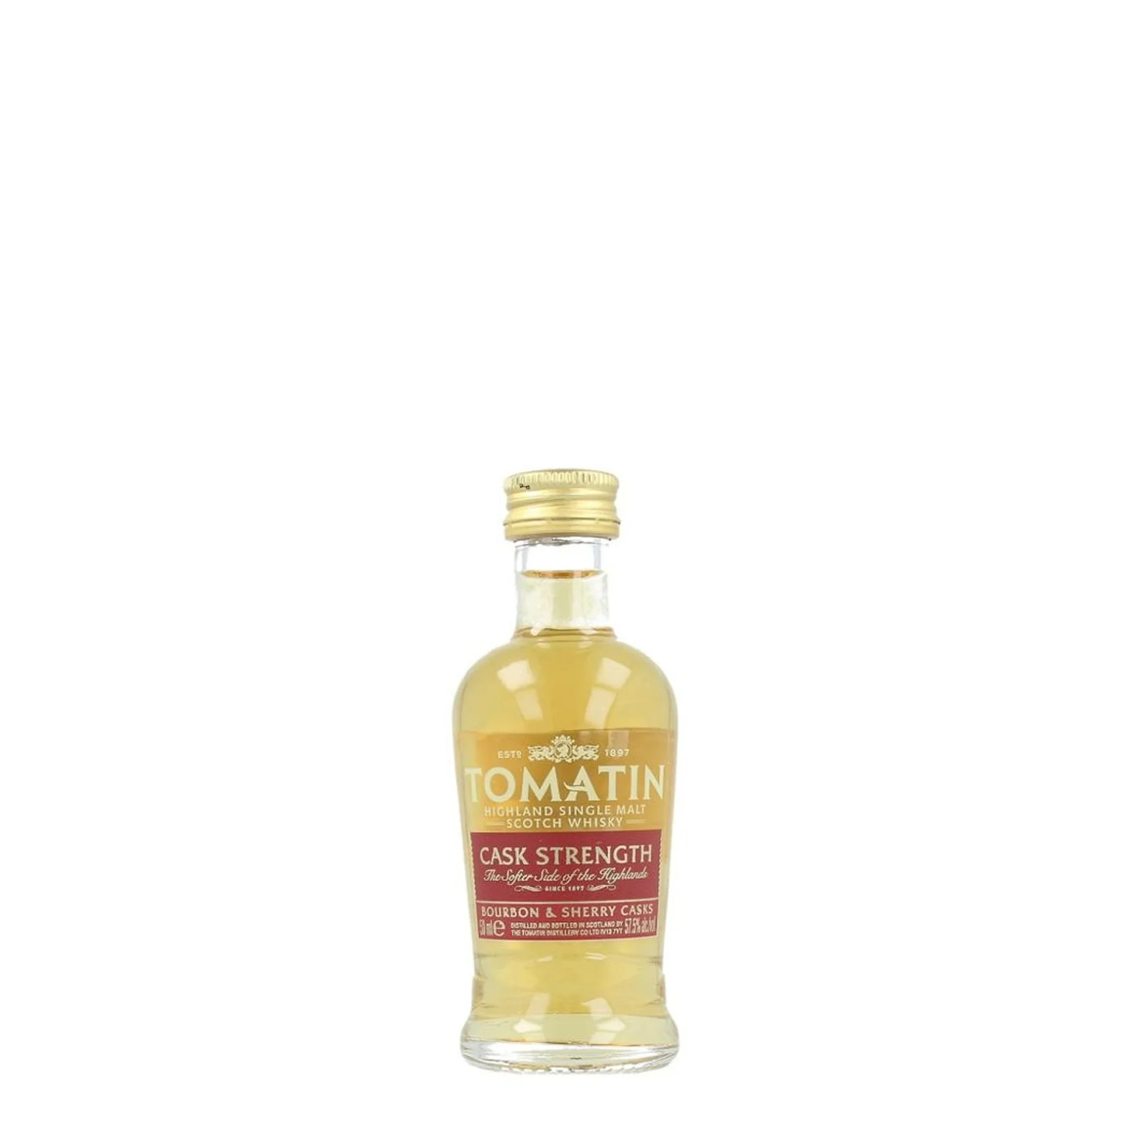 Tomatin, Cask Strength Single Malt Whisky, 5cl - Miniature